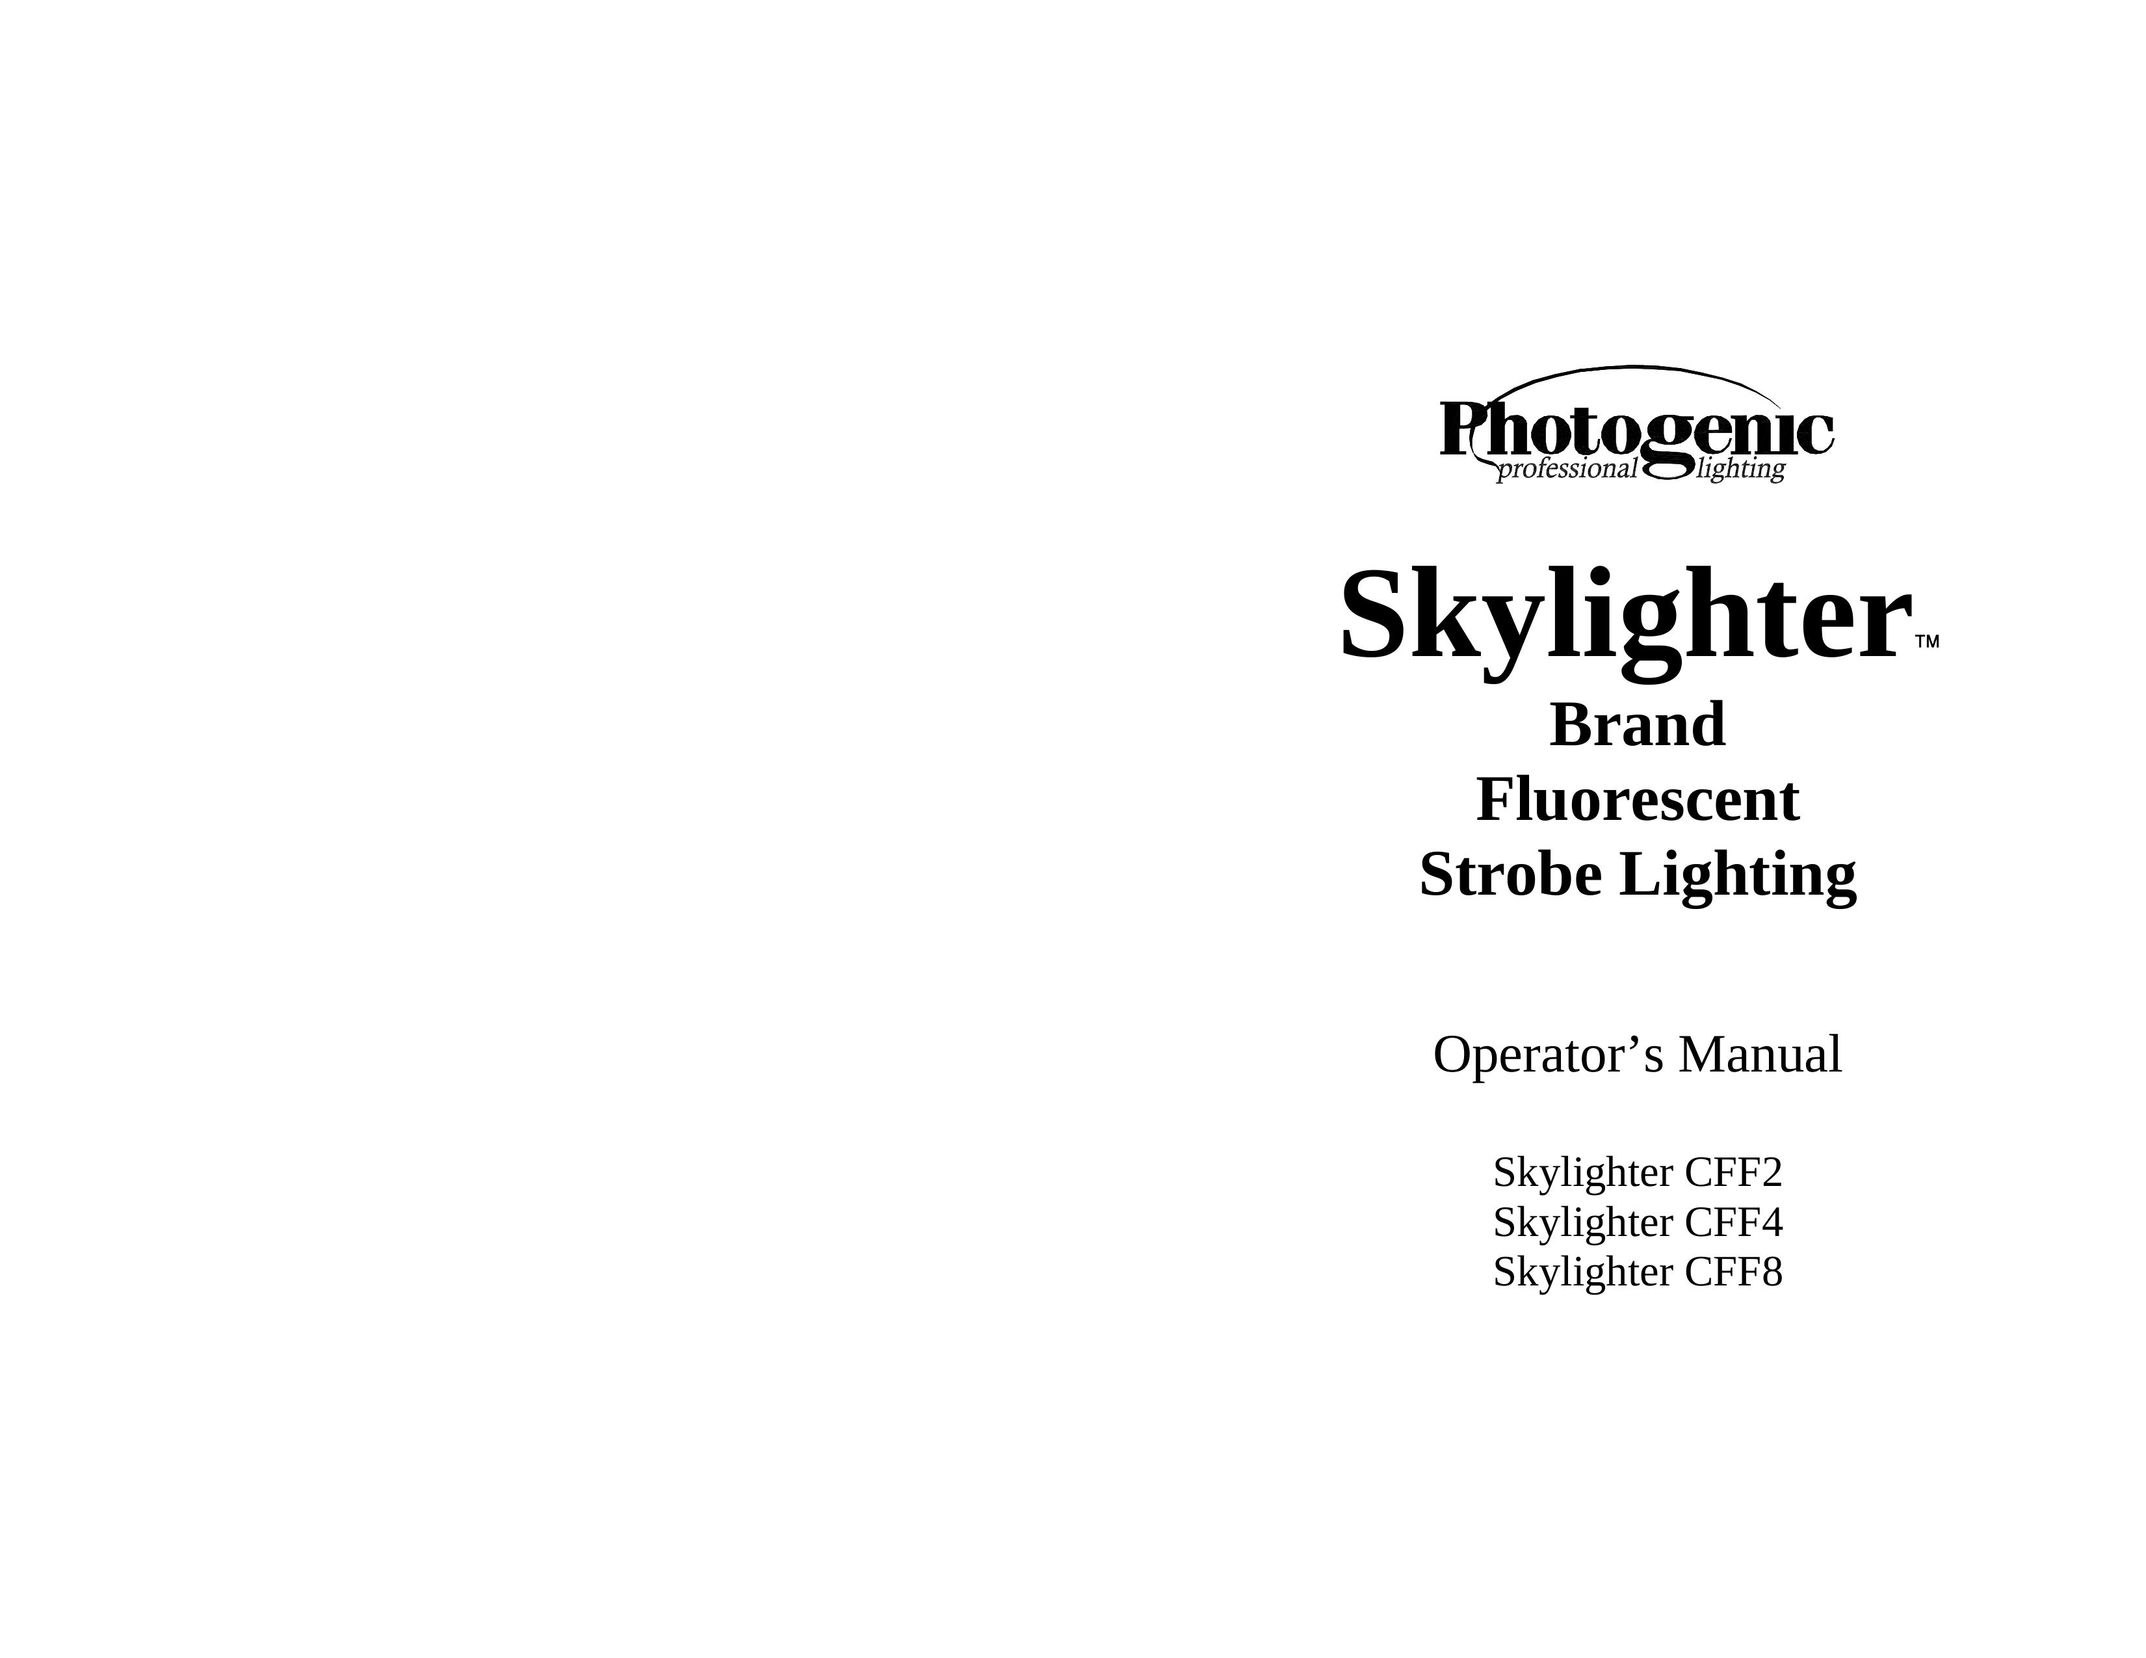 Photogenic Professional Lighting CFF8 Power Supply User Manual